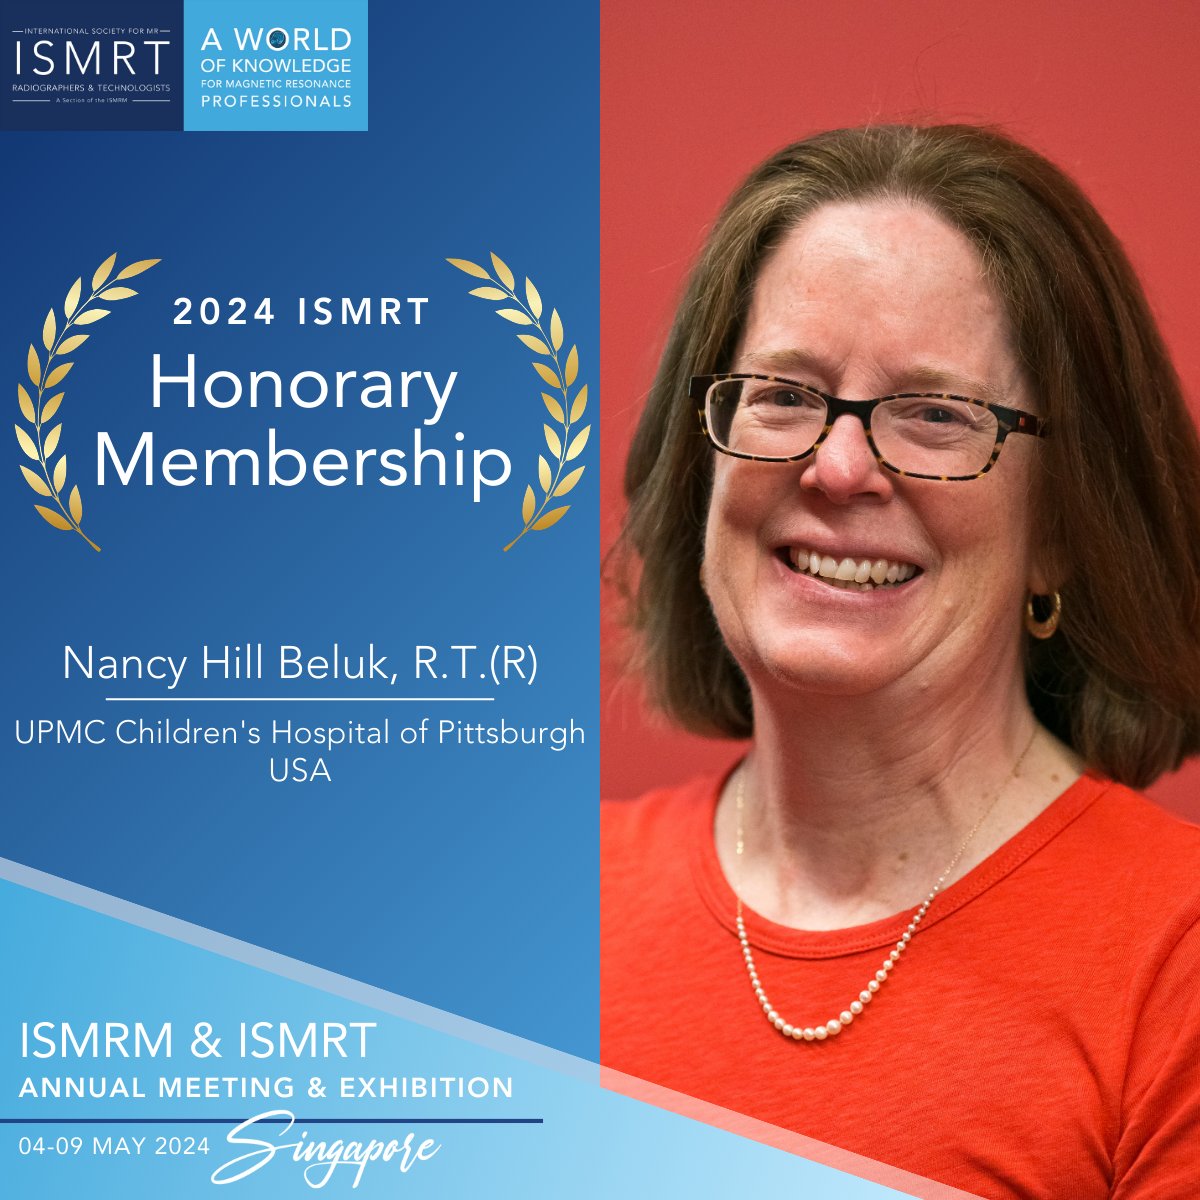 Another huge congratulations to Nancy Hill Beluk, R.T.(R), winner of the 2024 ISMRT Honorary Membership Award!

#ISMRT2024 #ISMRM2024 #ISMRT #ISMRM #MRI #MR #MagneticResonance #Singapore